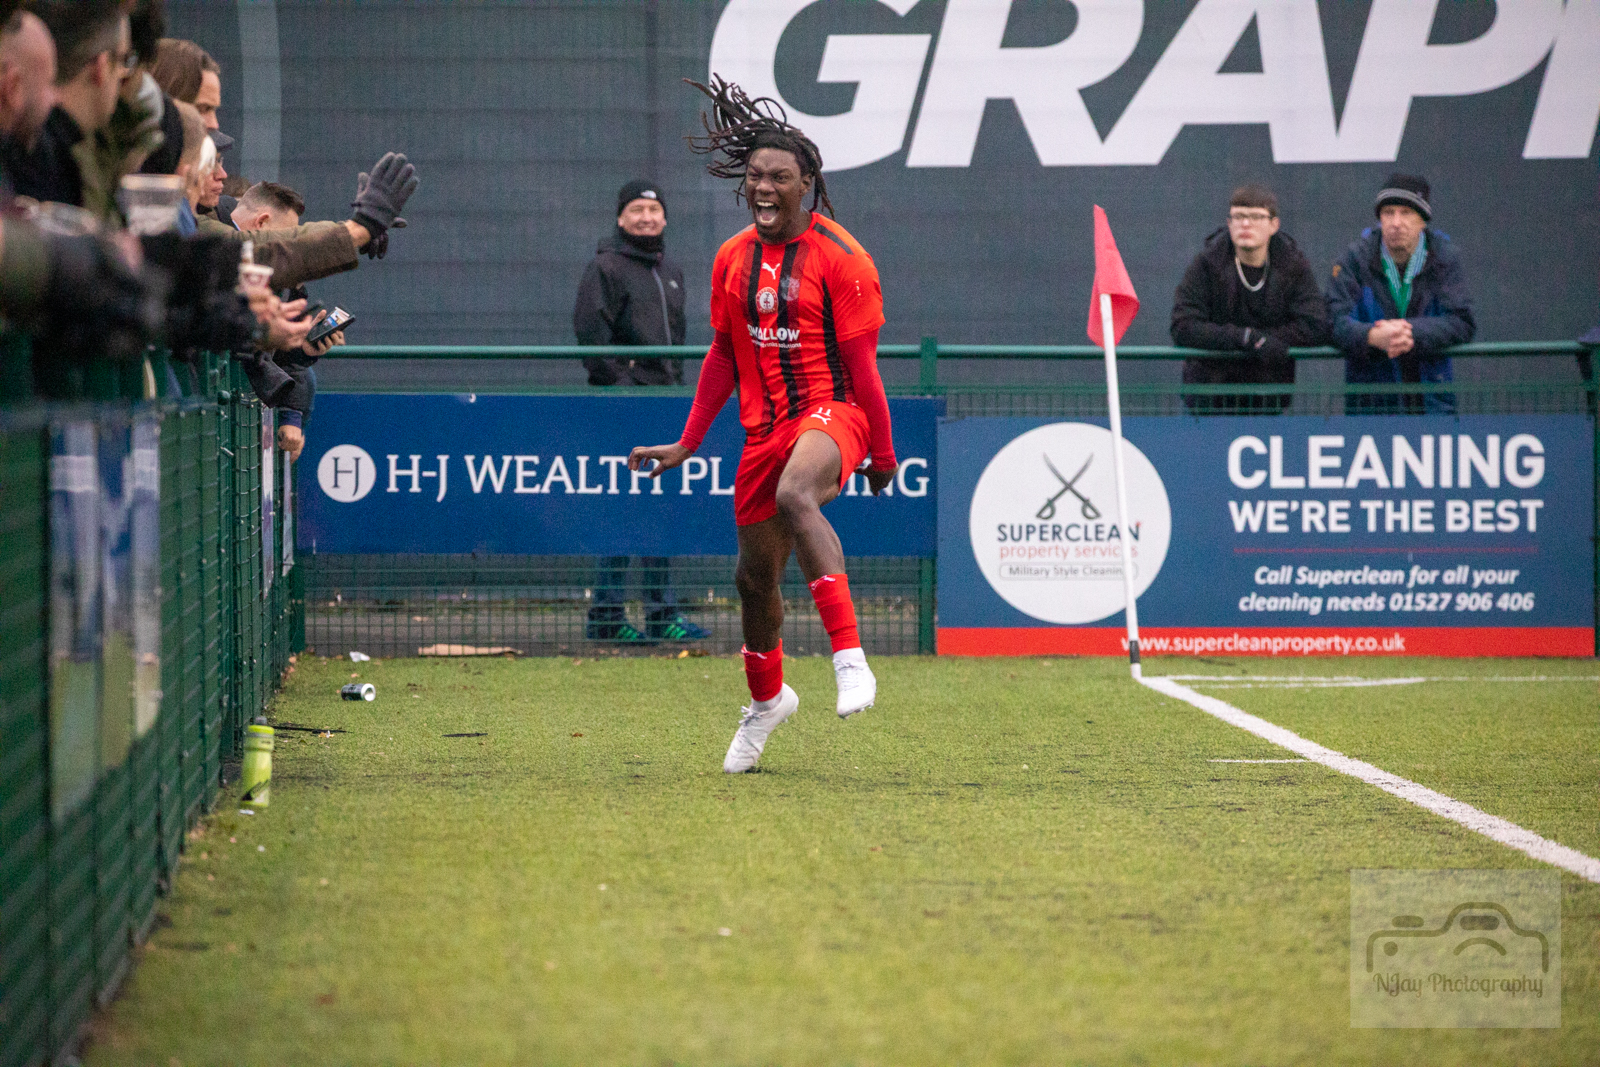 Video: Watch Bernard Mensah's goal against Bromsgrove Sporting